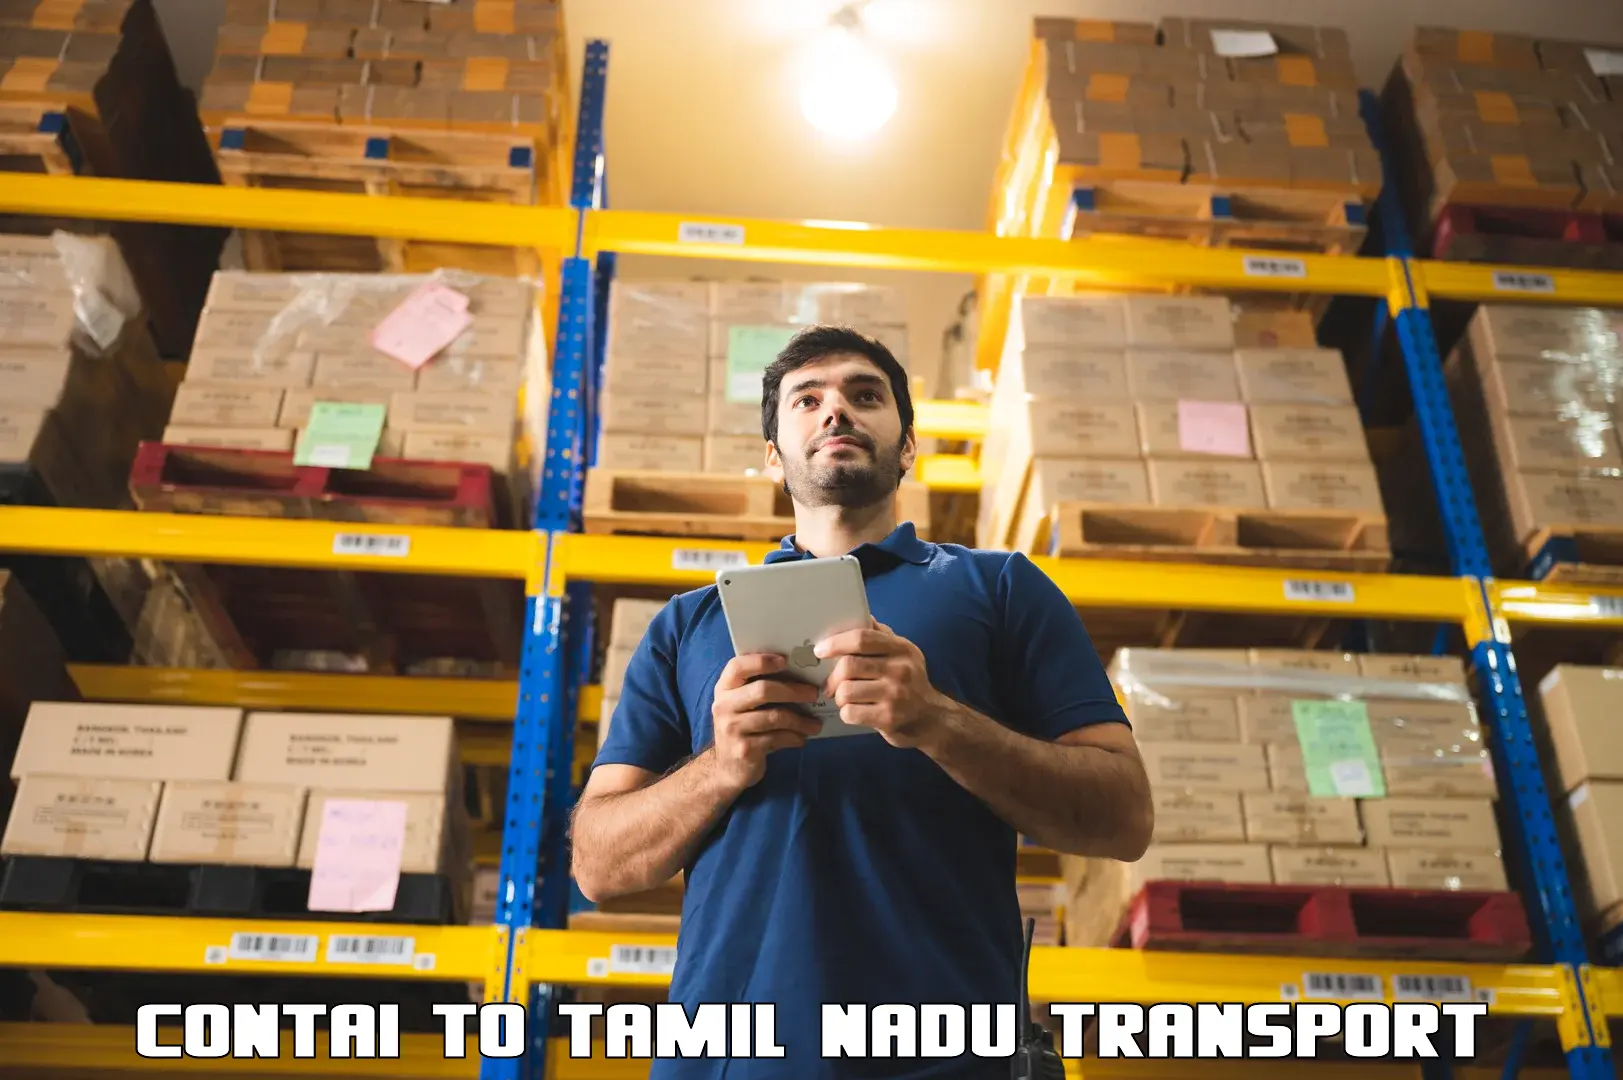 Interstate transport services Contai to Tamil Nadu